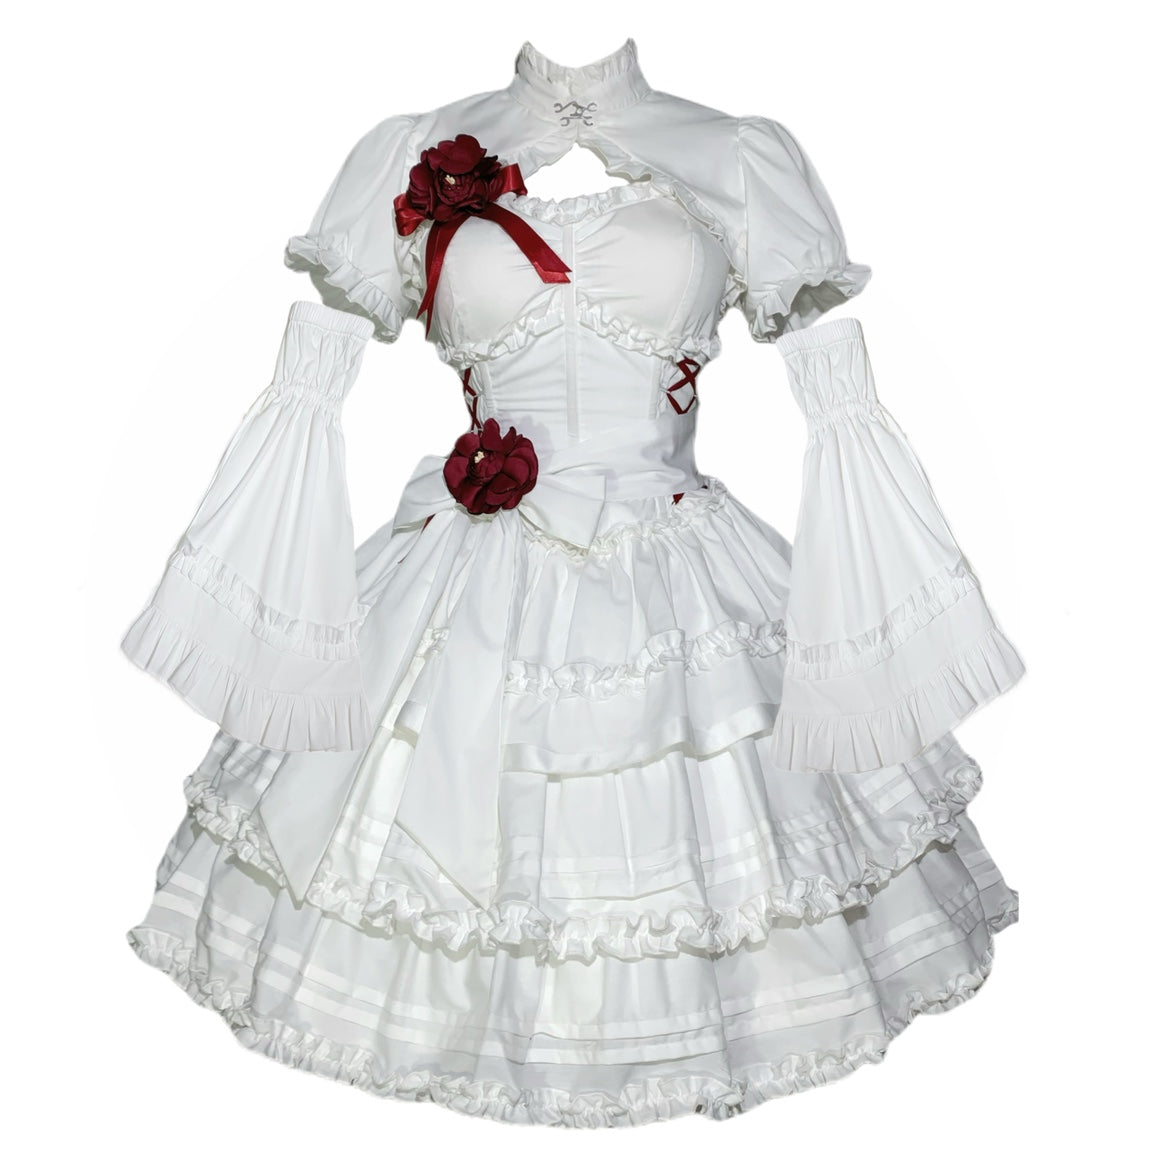 Mengfuzi~LiLith~White Gothic Lolita Dress With Optional Bolero and Sleeves XS White jsk + small bolero + drawstring sleeves 